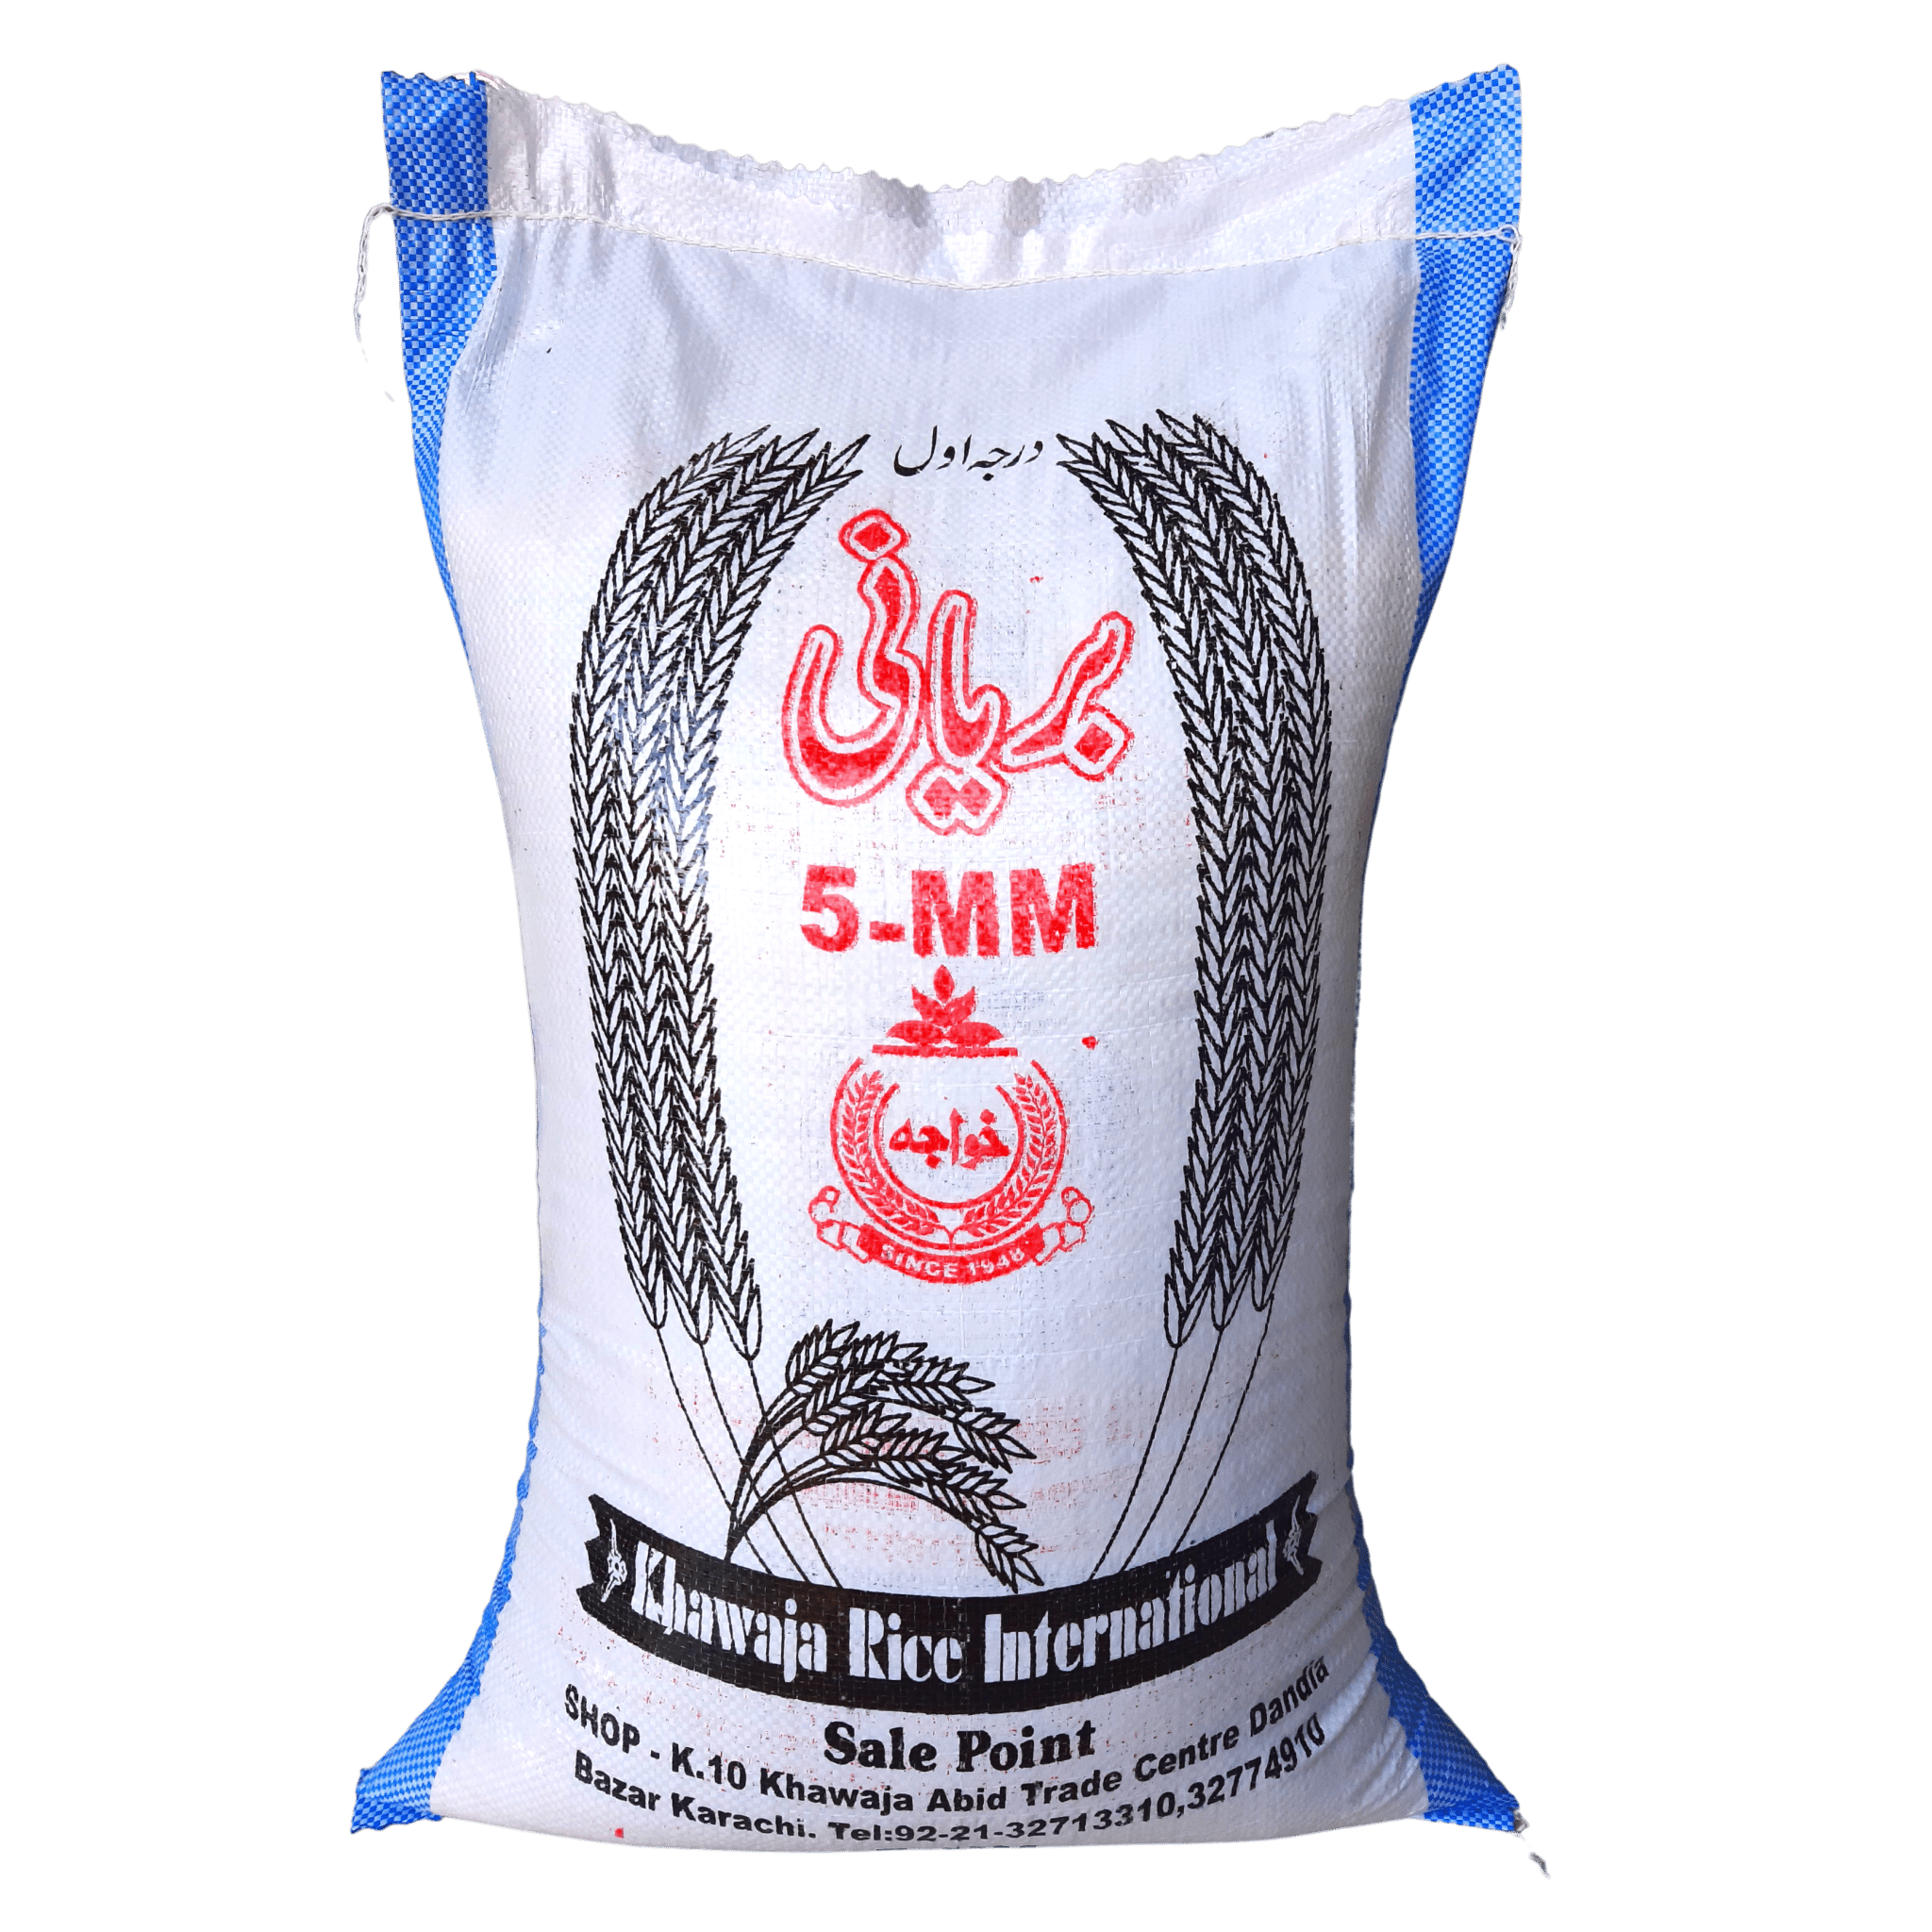 5MM Biryani (Blended Basmati) - Khawaja Rice InternationalKhawaja Rice InternationalKhawaja Rice International5MM Biryani (Blended Basmati)25 KG5MM Biryani (Blended Basmati)